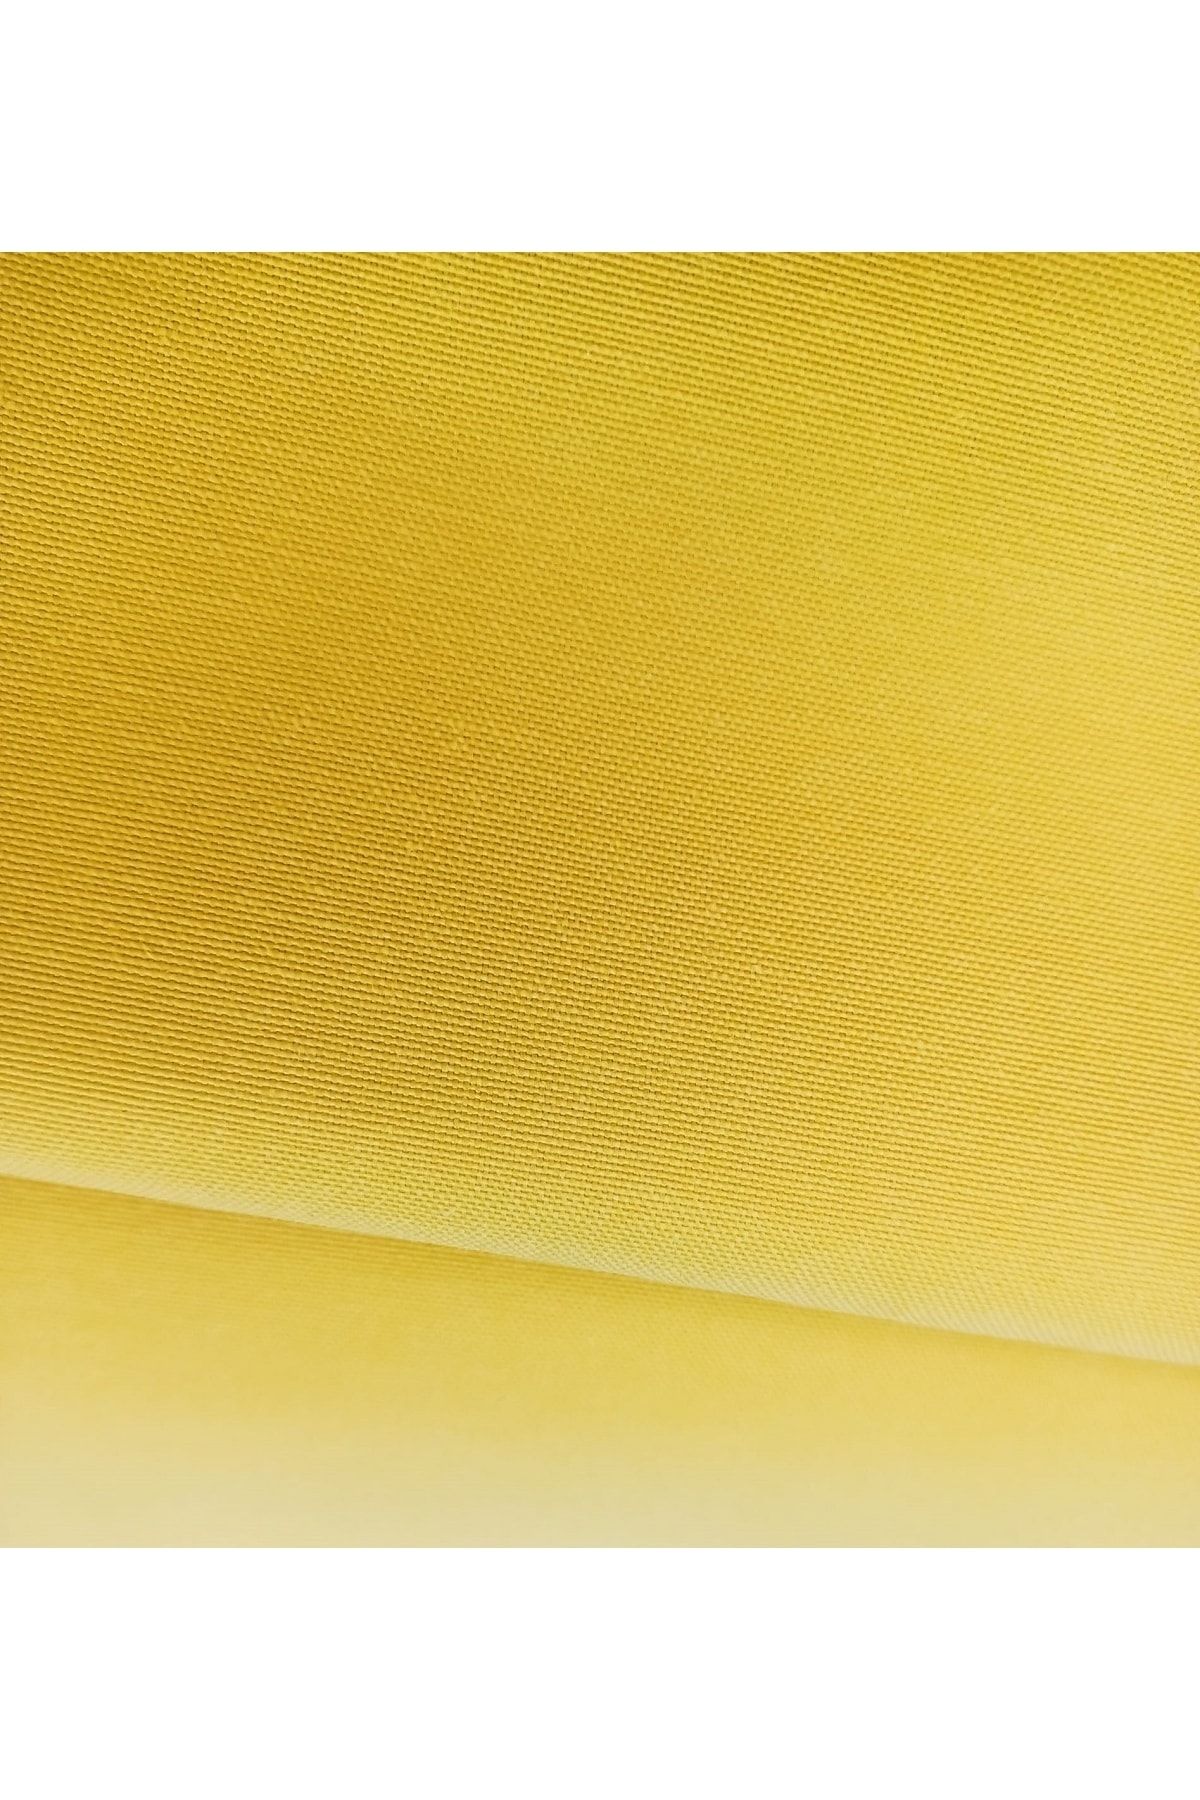 fabricorg Duck Bezi Punch Keten Kumaşı Sarı (50X180 CM)